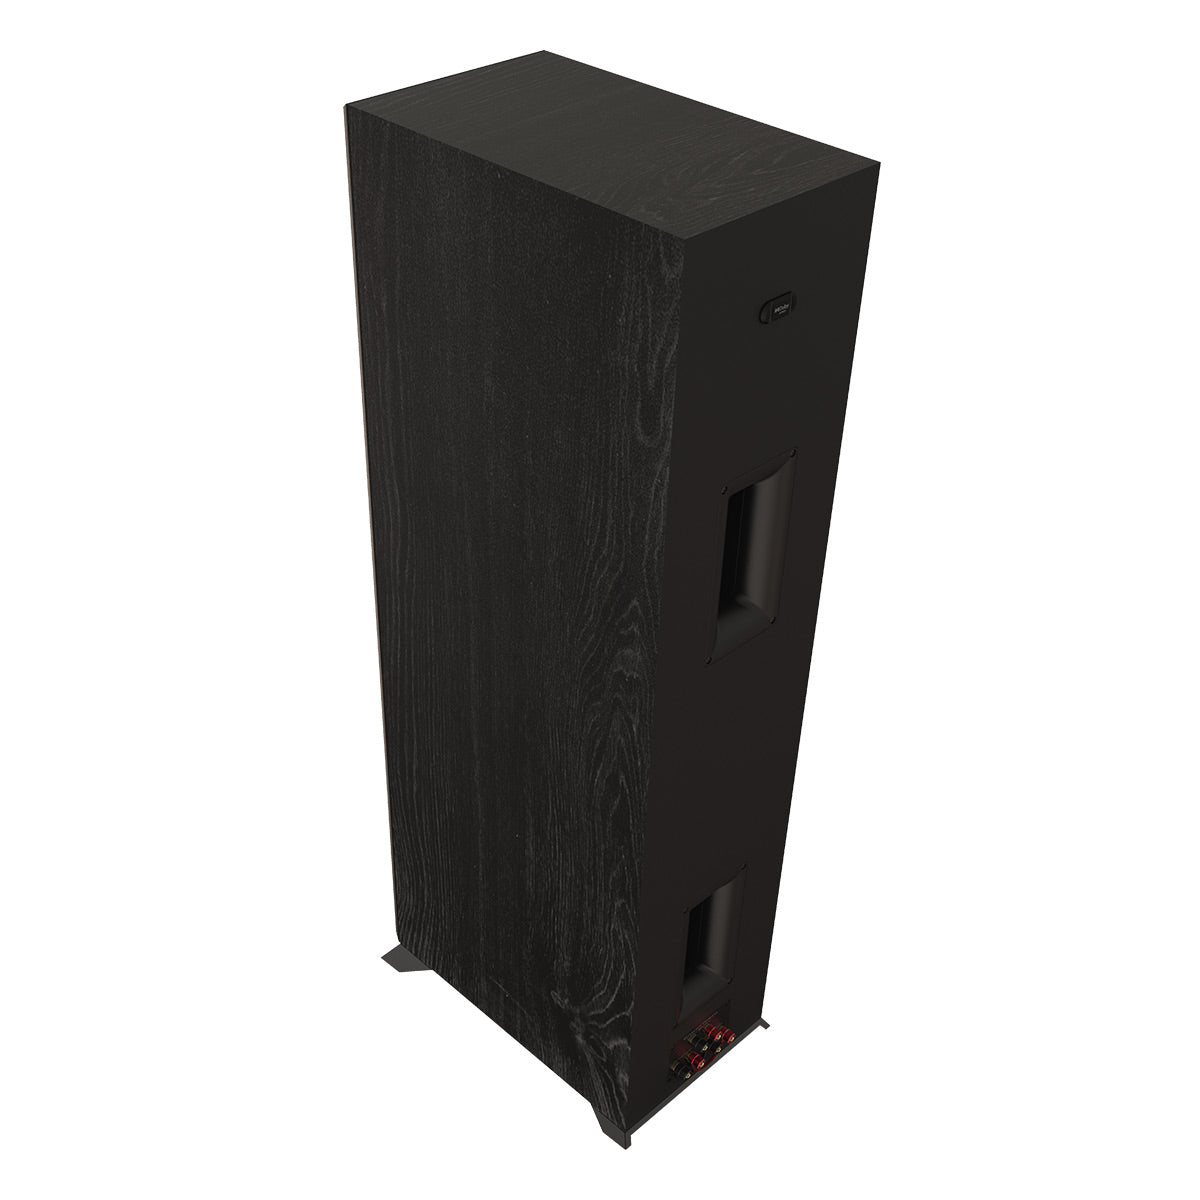 Klipsch RP-8000F Tower Speaker Review